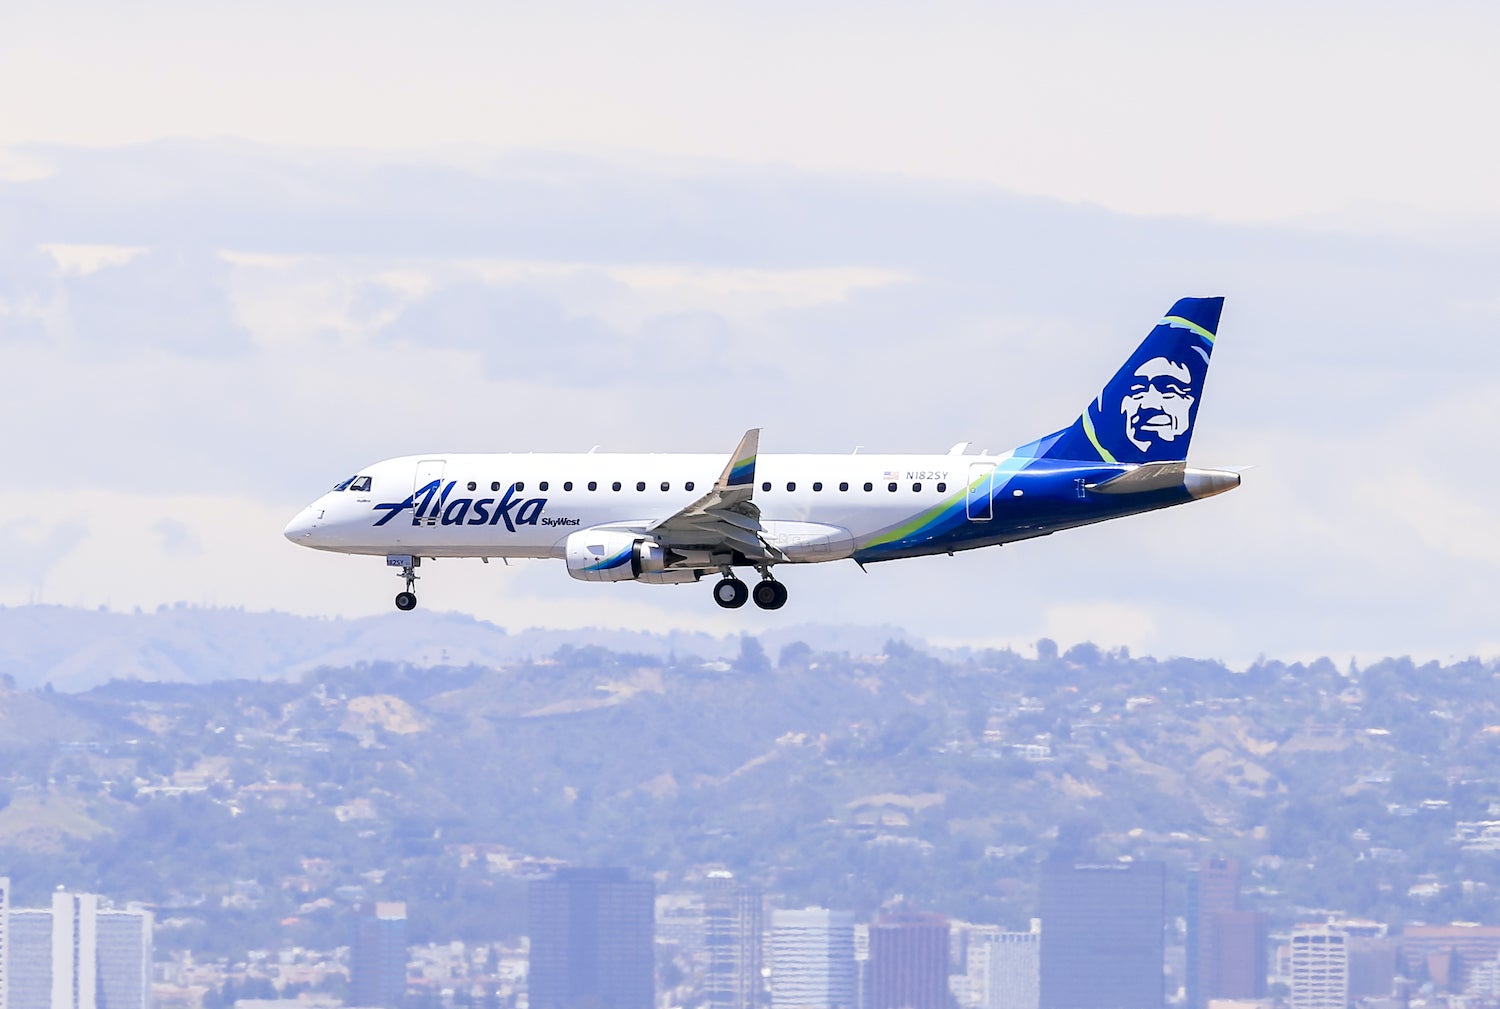 Alaska Airlines Airplane Landing at LAX